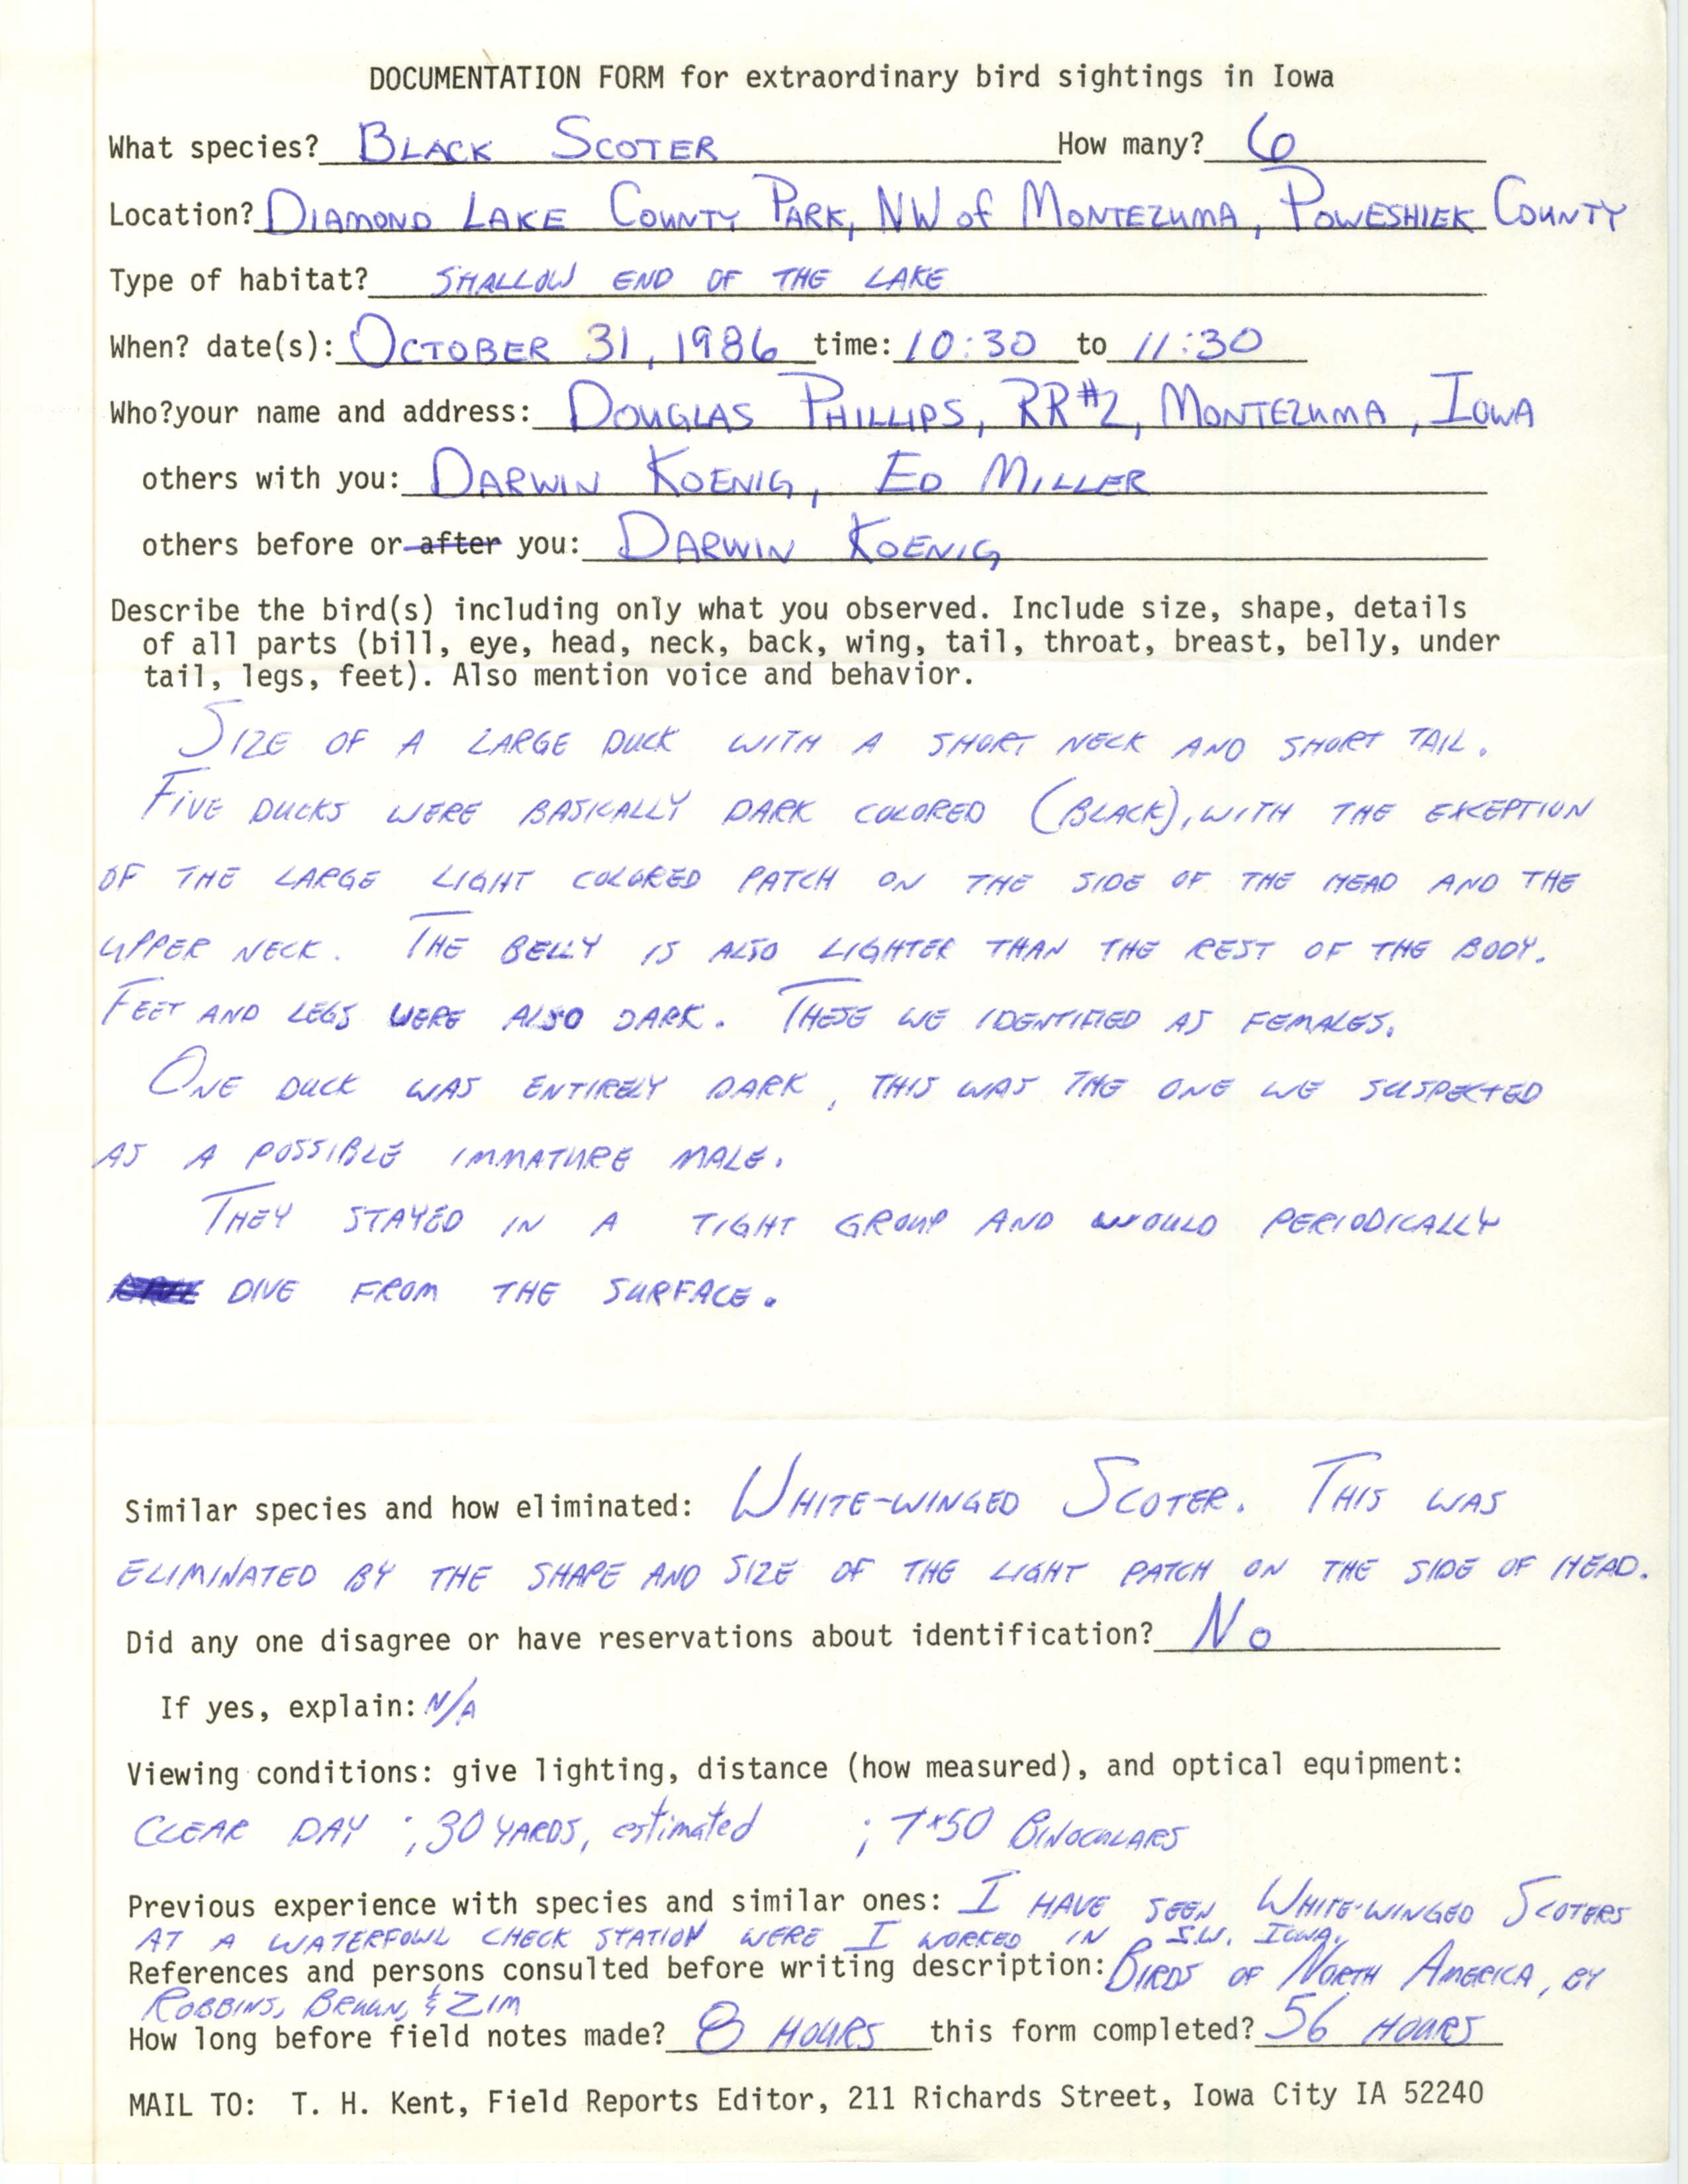 Rare bird documentation form for Black Scoter at Diamond Lake County Park in 1986